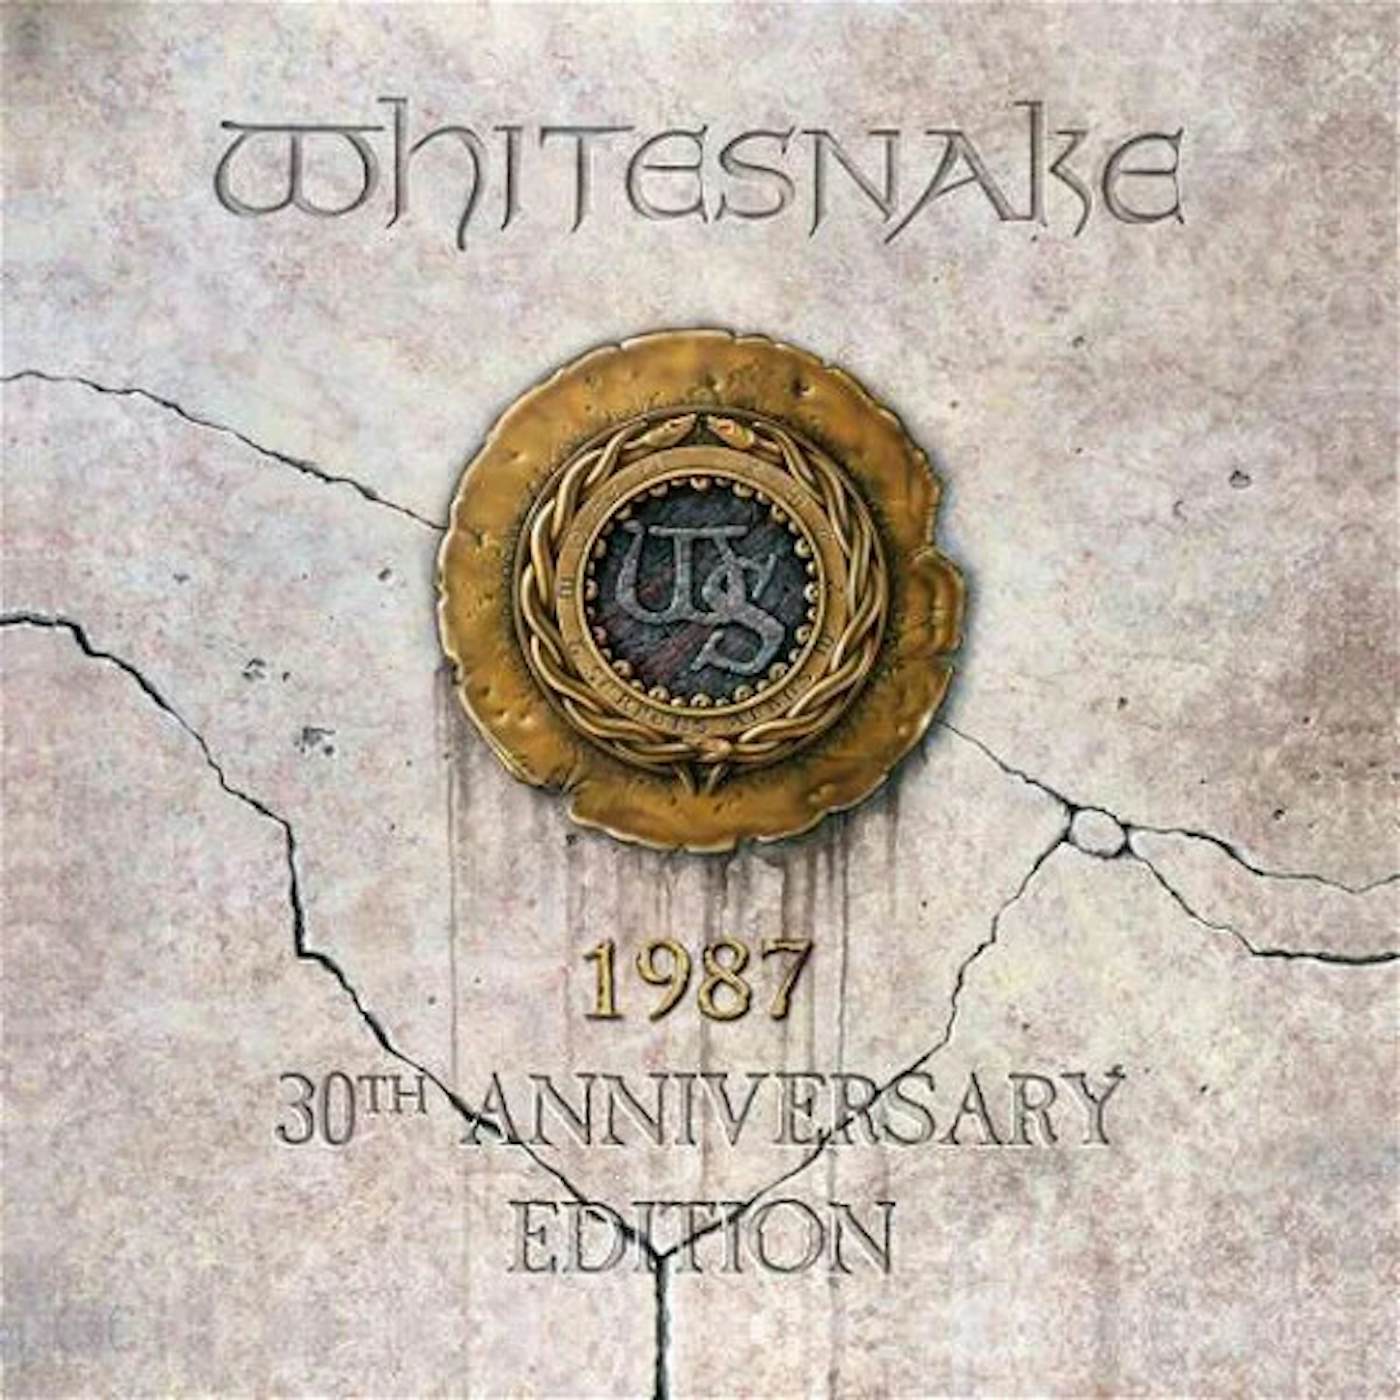 Whitesnake 1987: 30TH ANNIVERSARY Vinyl Record